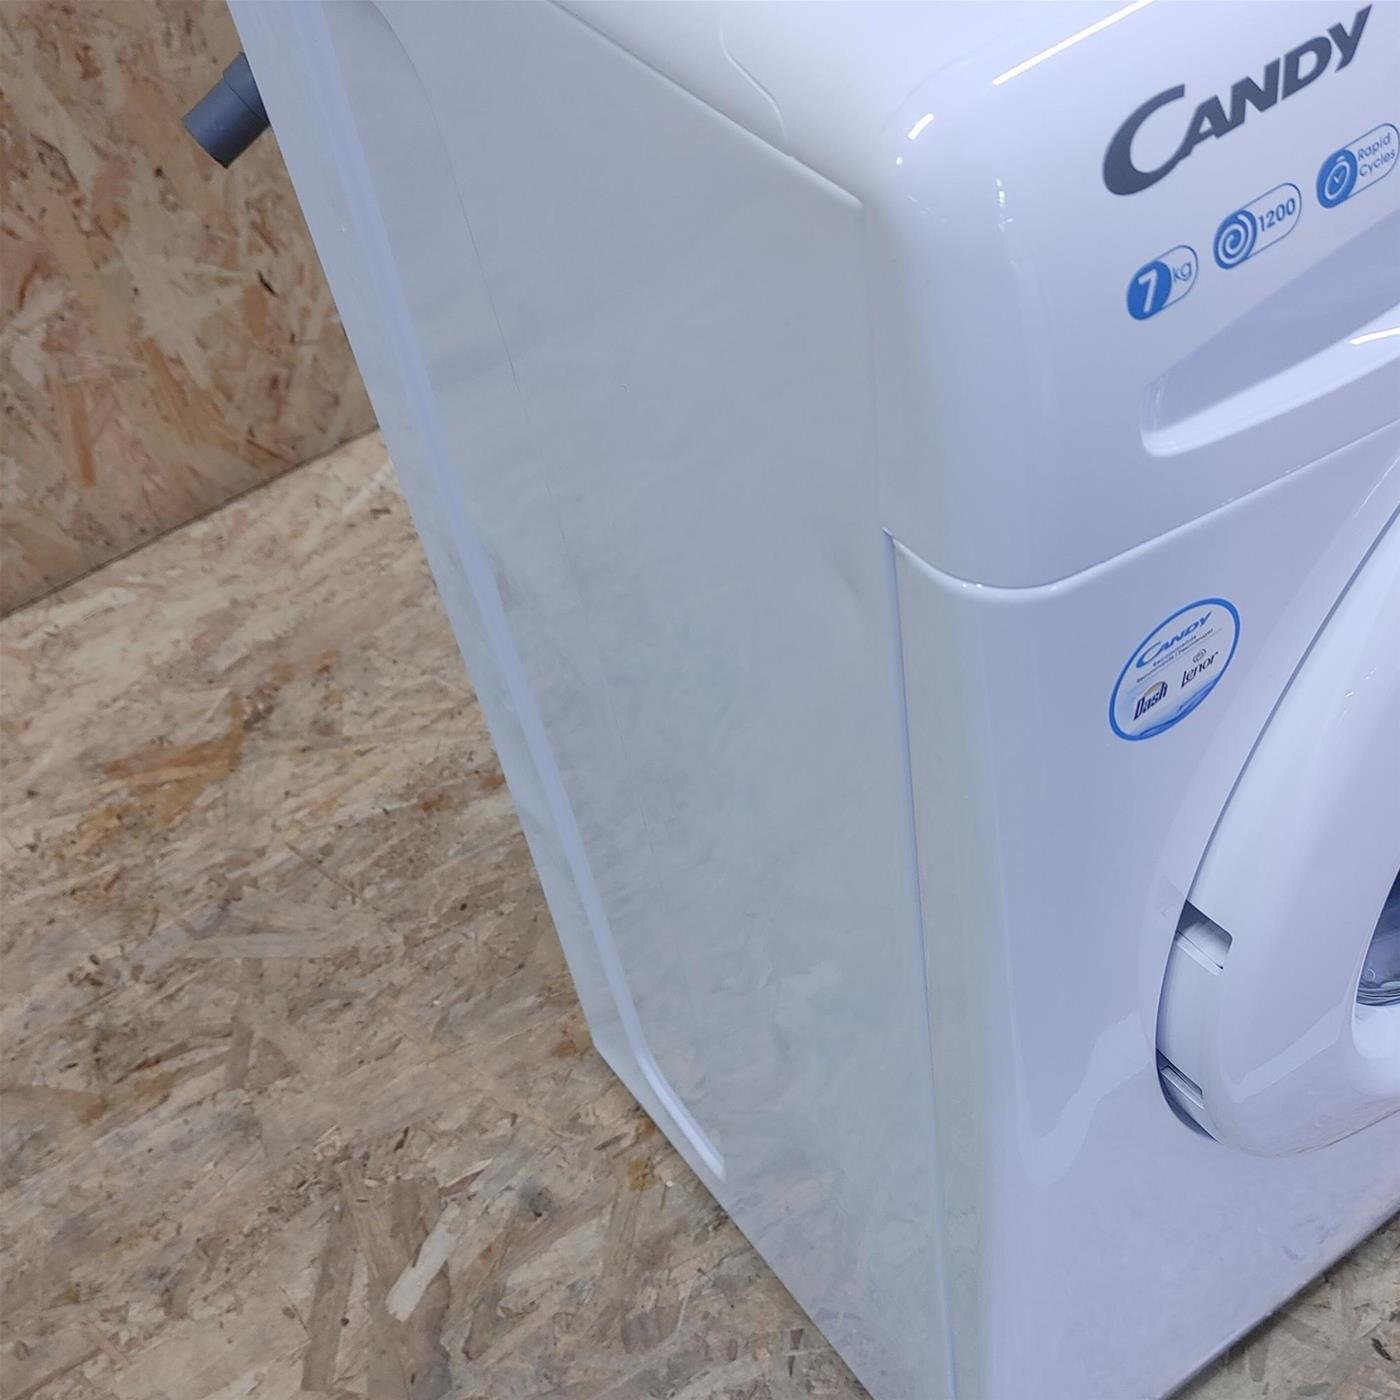 Candy CS1272DE/1-11 lavatrice Caricamento frontale 7 kg 1200 Giri/min Bianco